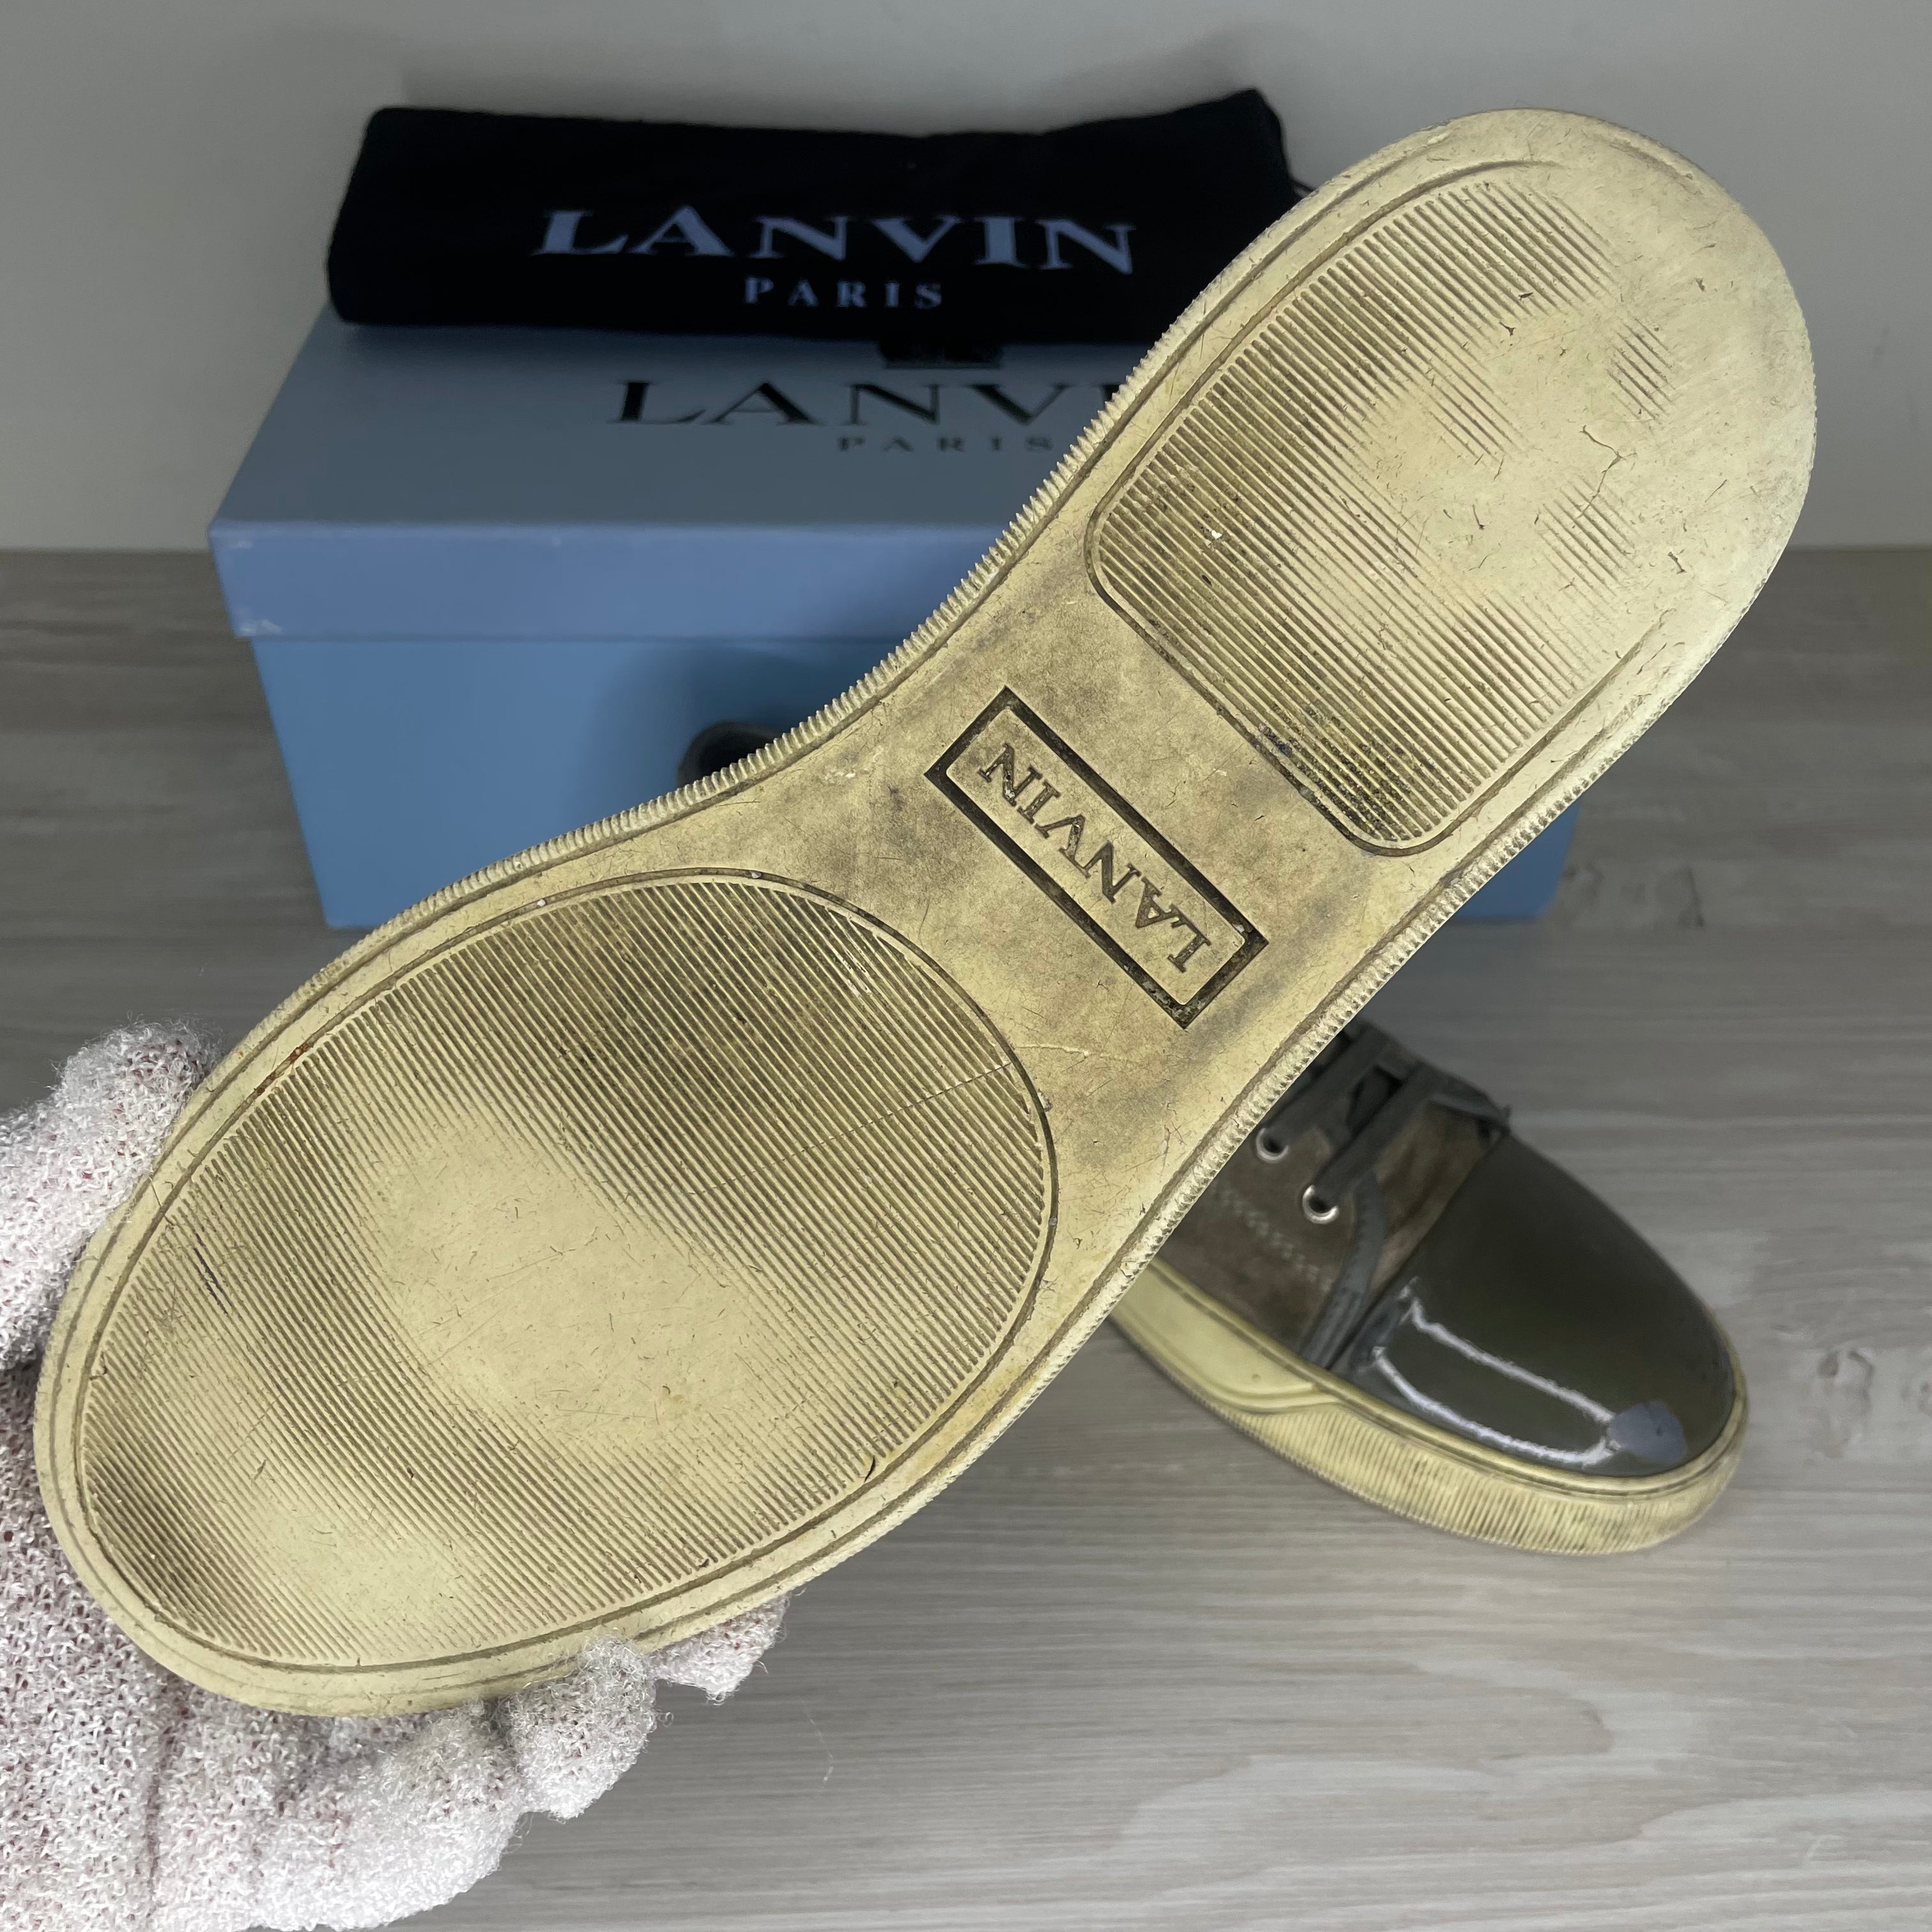 Lanvin Sneakers, 'Grey Suede' Lak Toe (41)